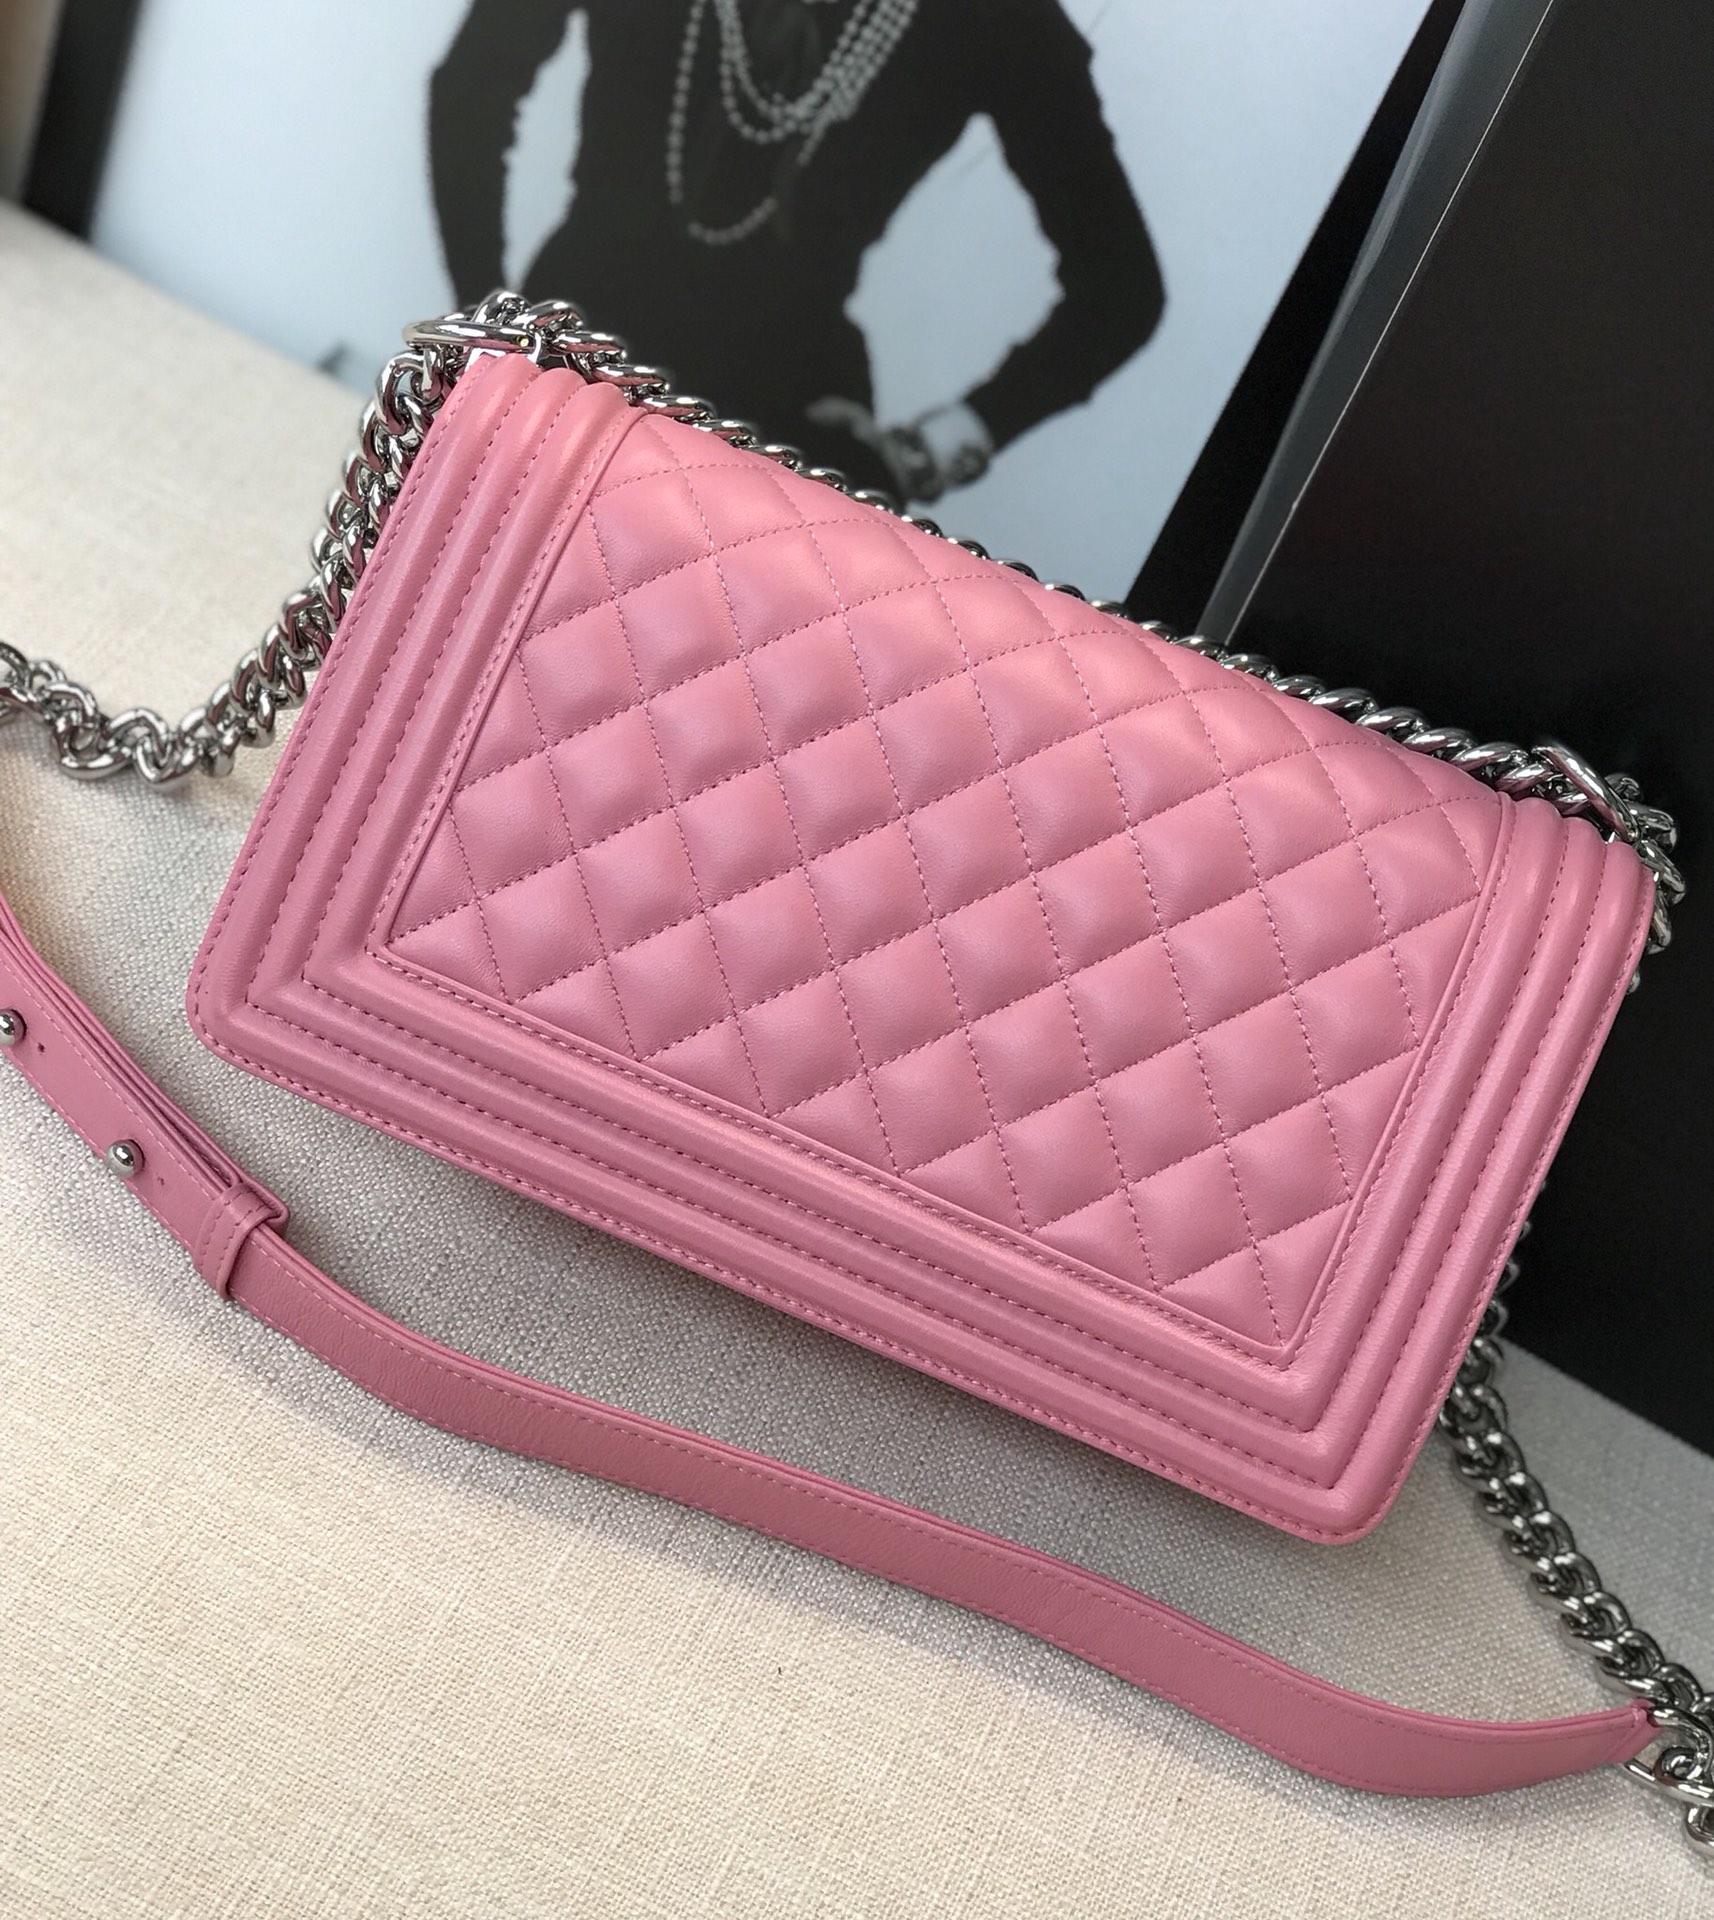 CC original lambskin boy medium handbag 67086 pink(shiny metal)